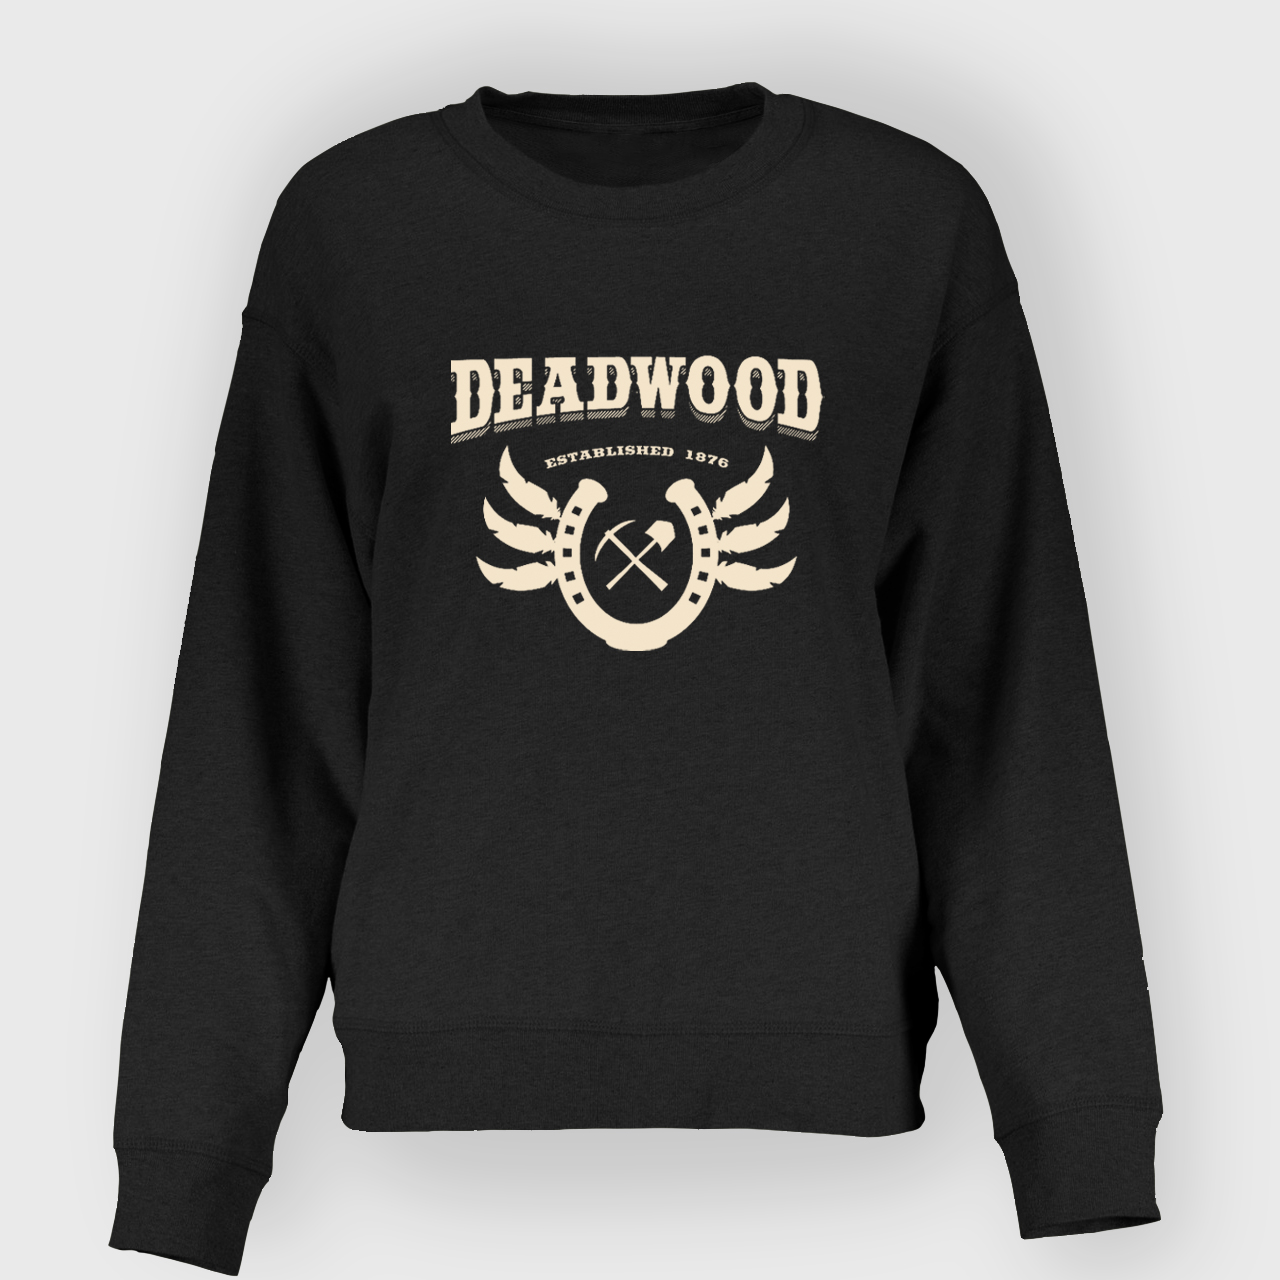 Deadwood. Established 1876 Sweatshirt